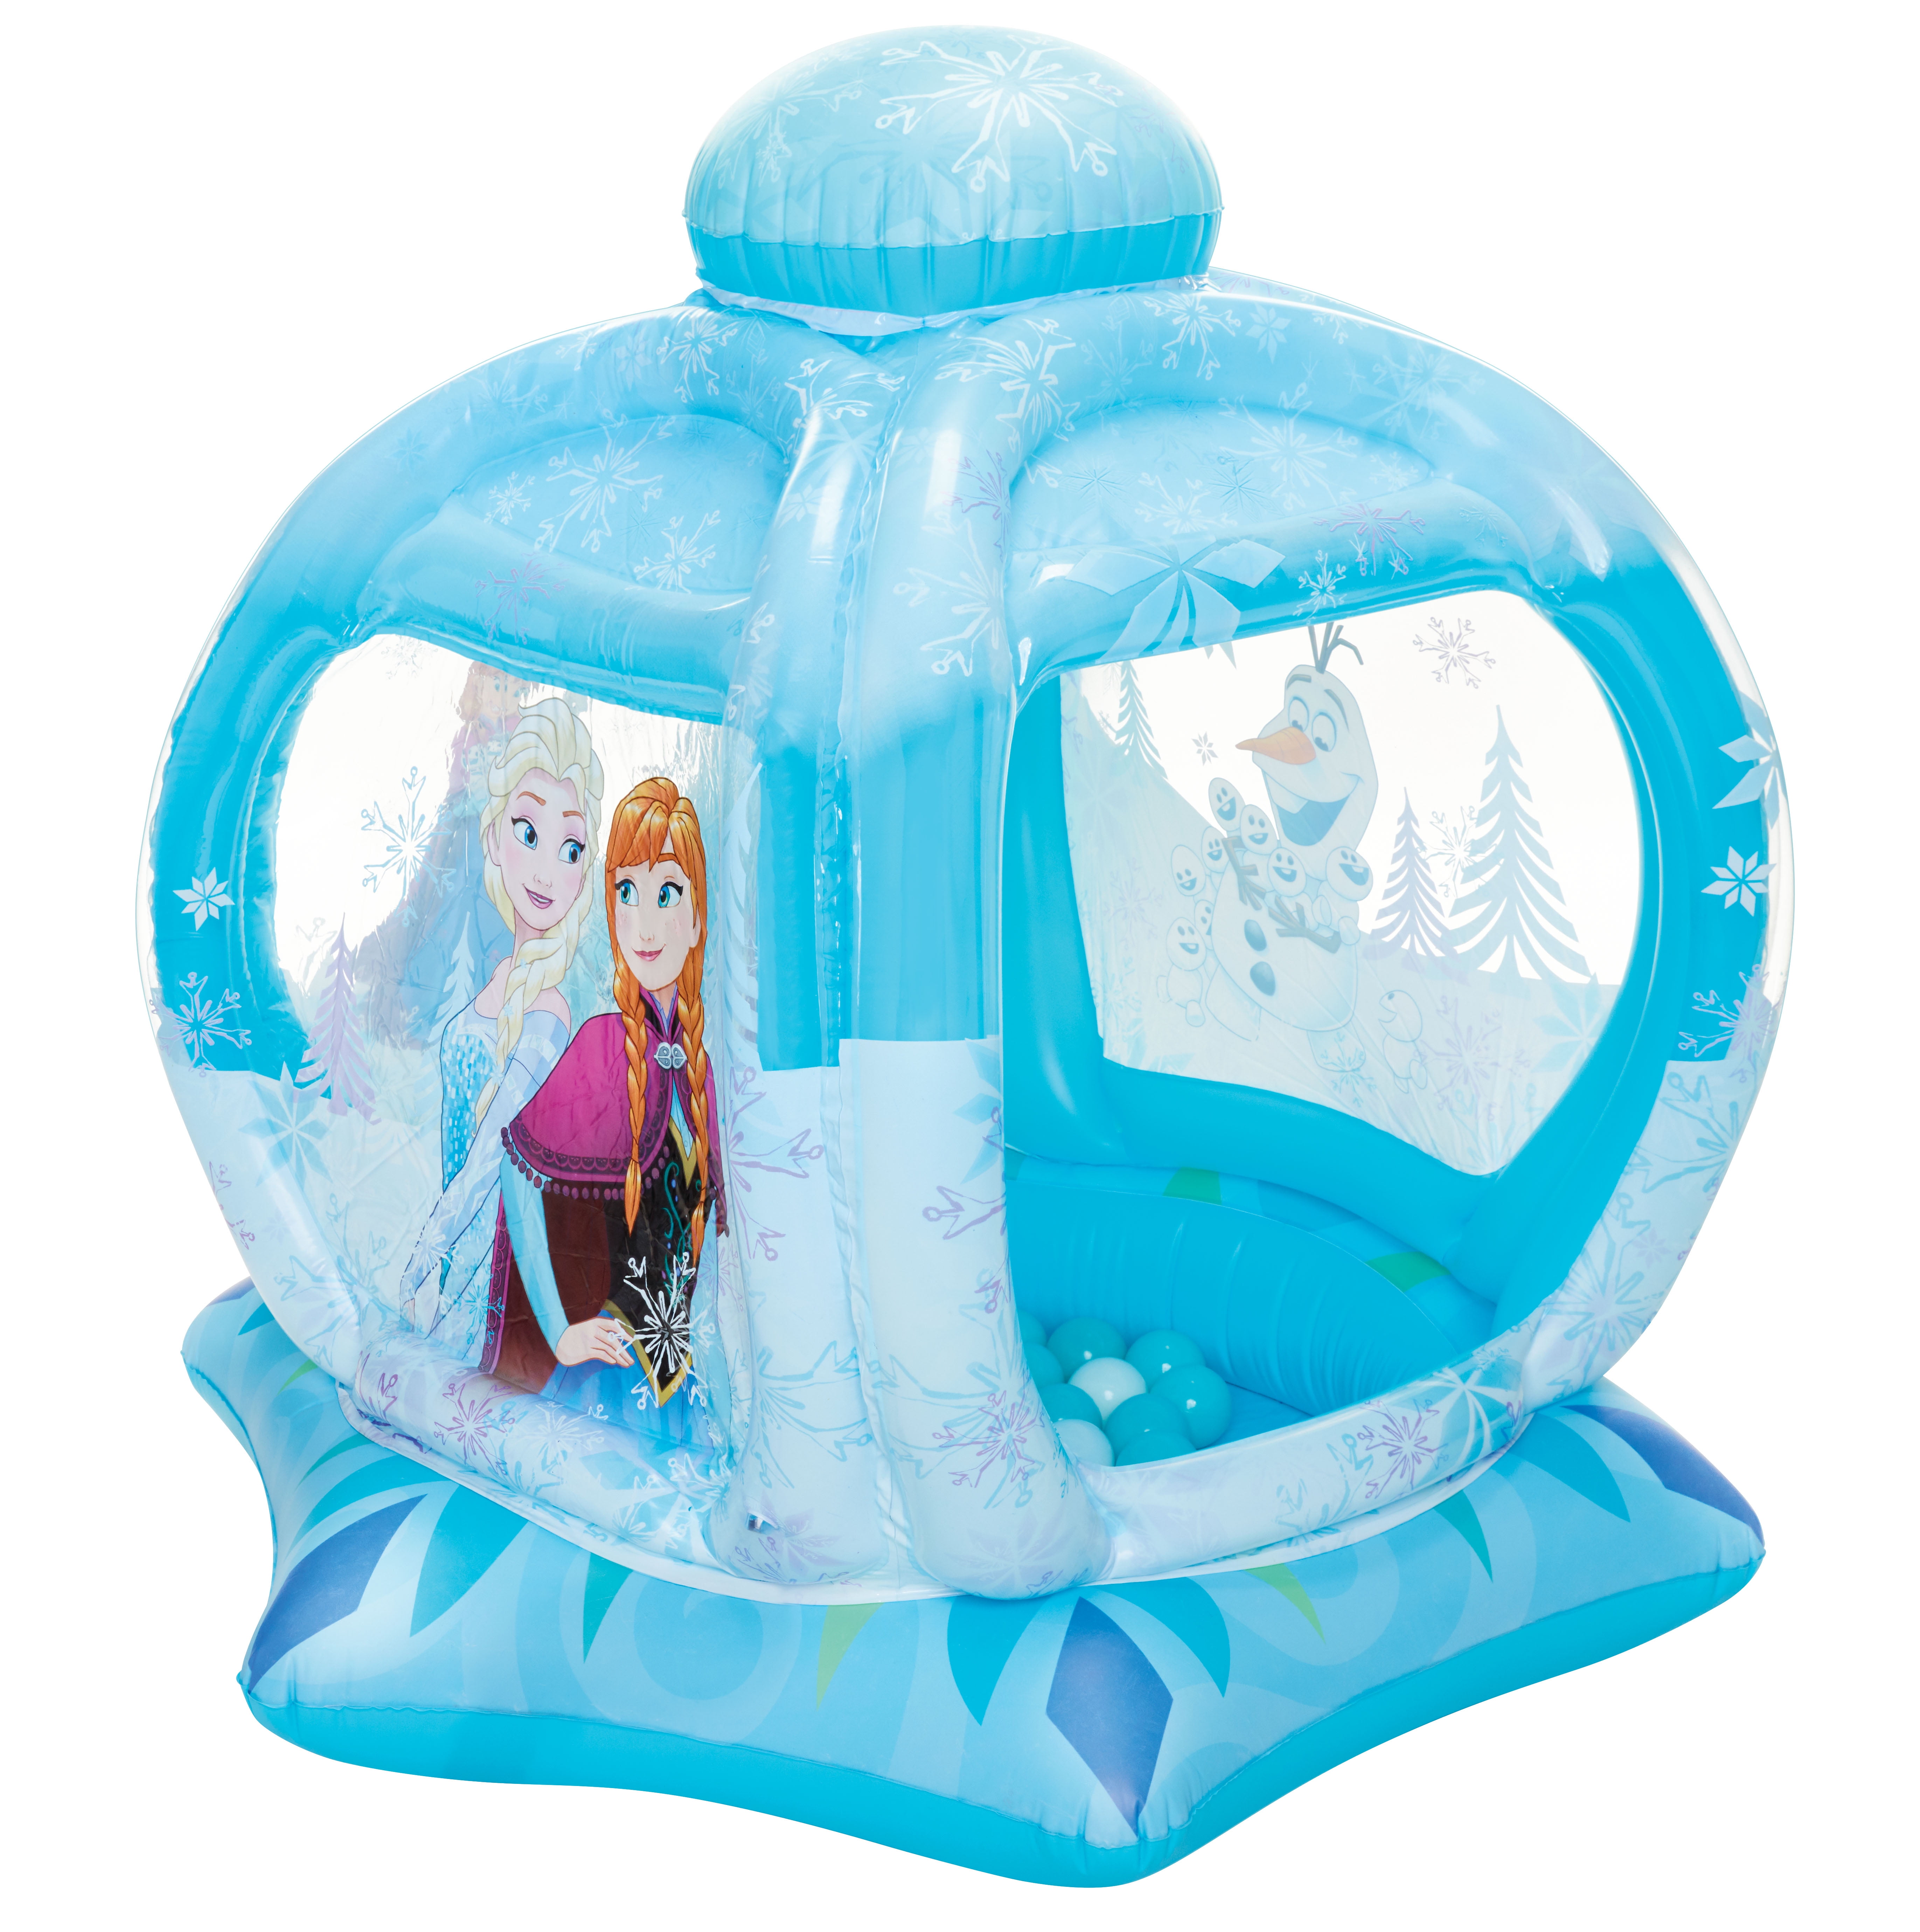 Disney Frozen Snow Globe Ballpit Playland includes 50